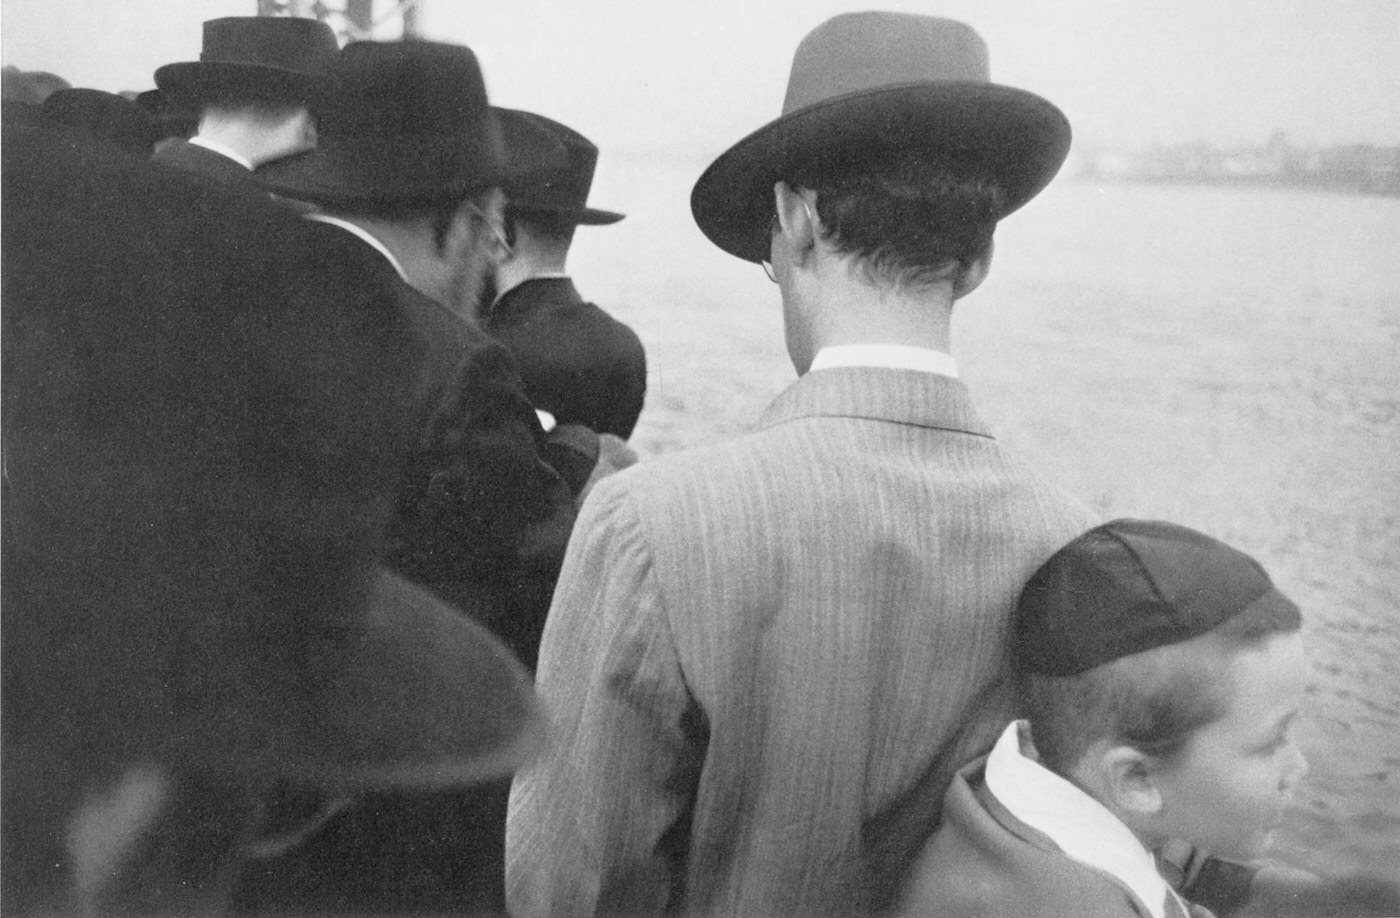 Yom Kippur, East River, New York City, 1955